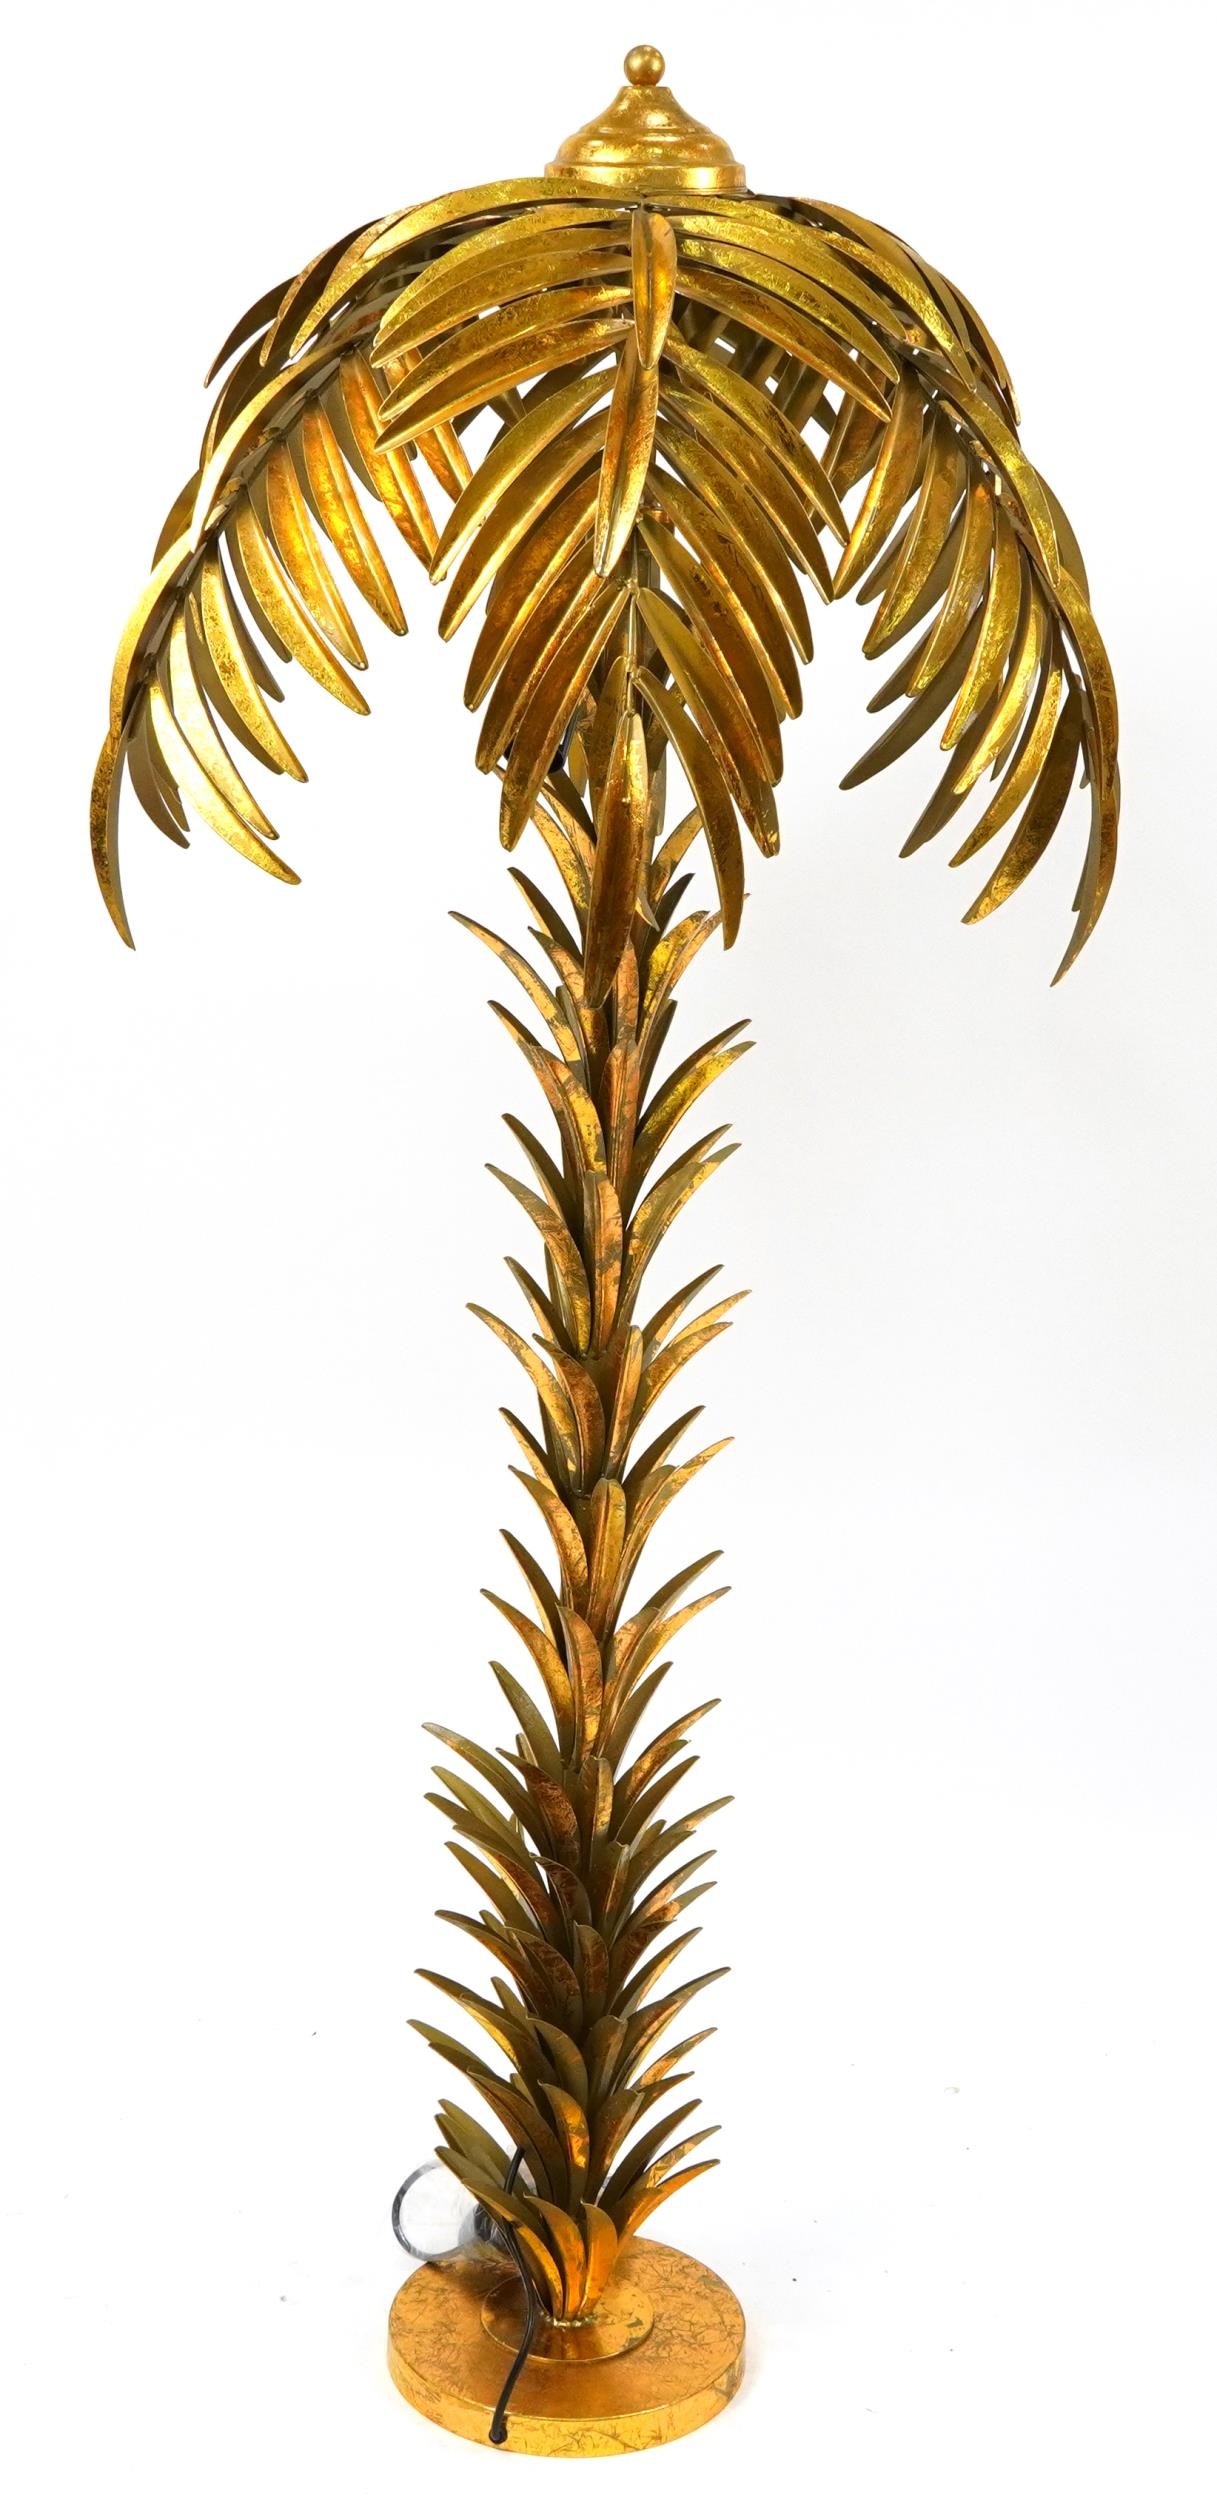 Hollywood Regency style floor standing gilt metal palm tree design standard lamp, 158cm high